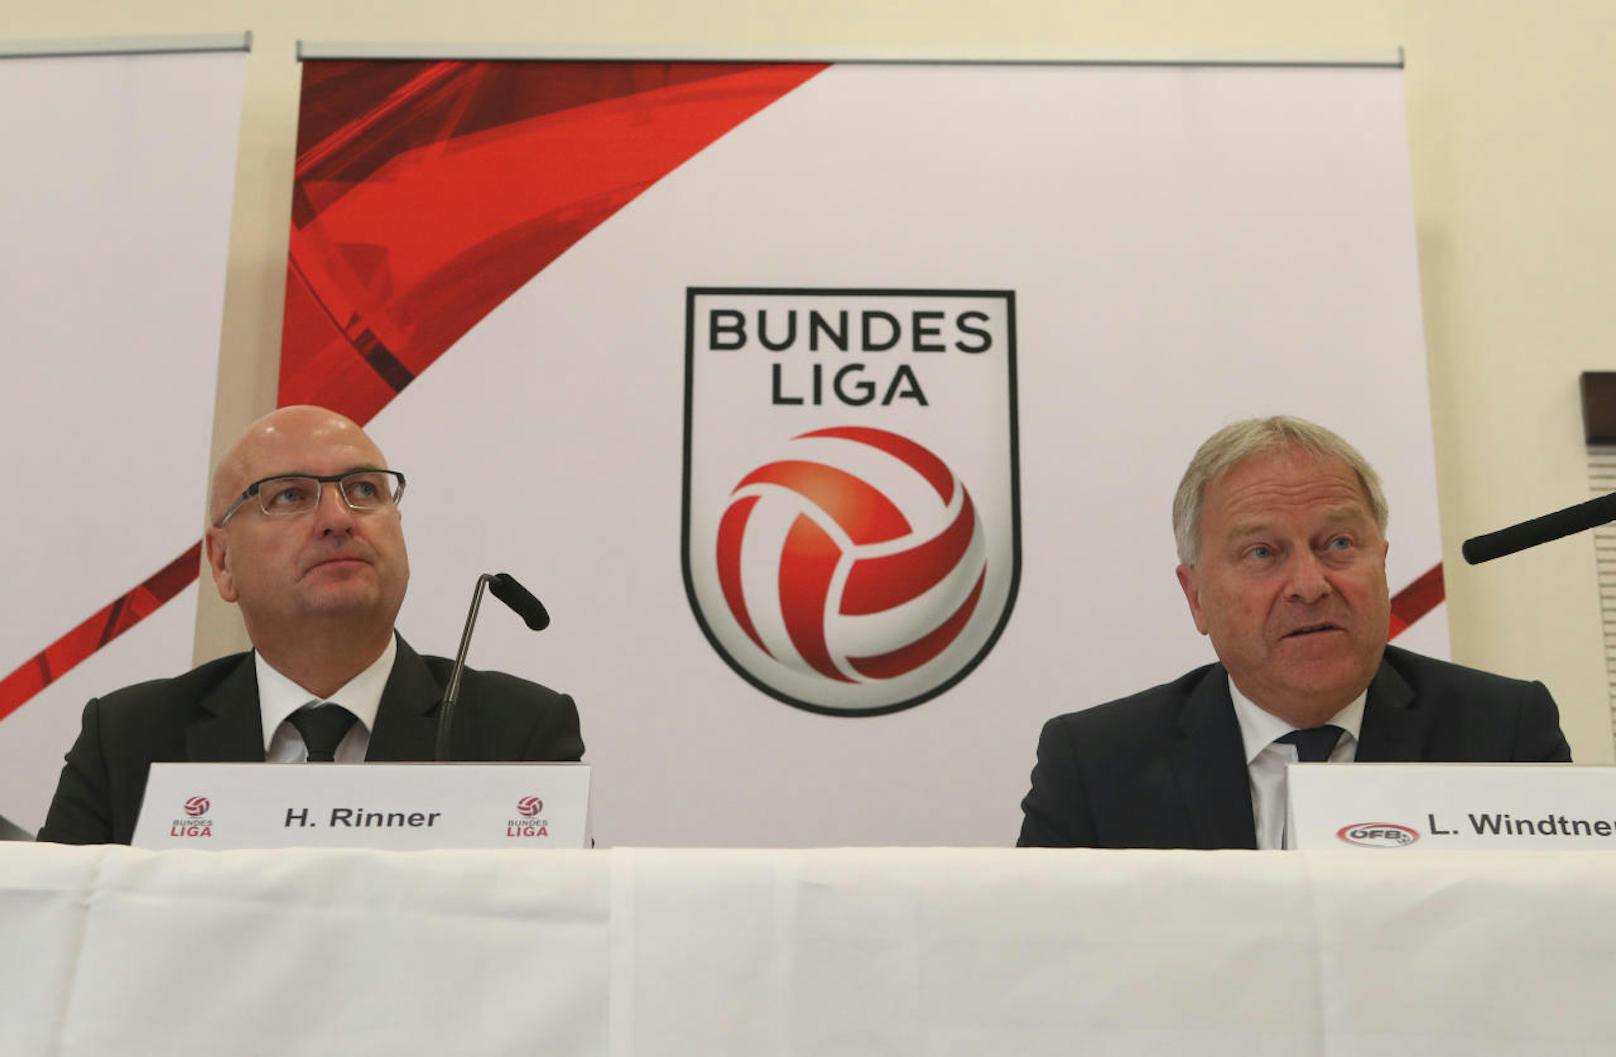 Besonders Bundesliga-Präsident Hans Rinner (li.) soll zu den Kritikern Windtners gehören.